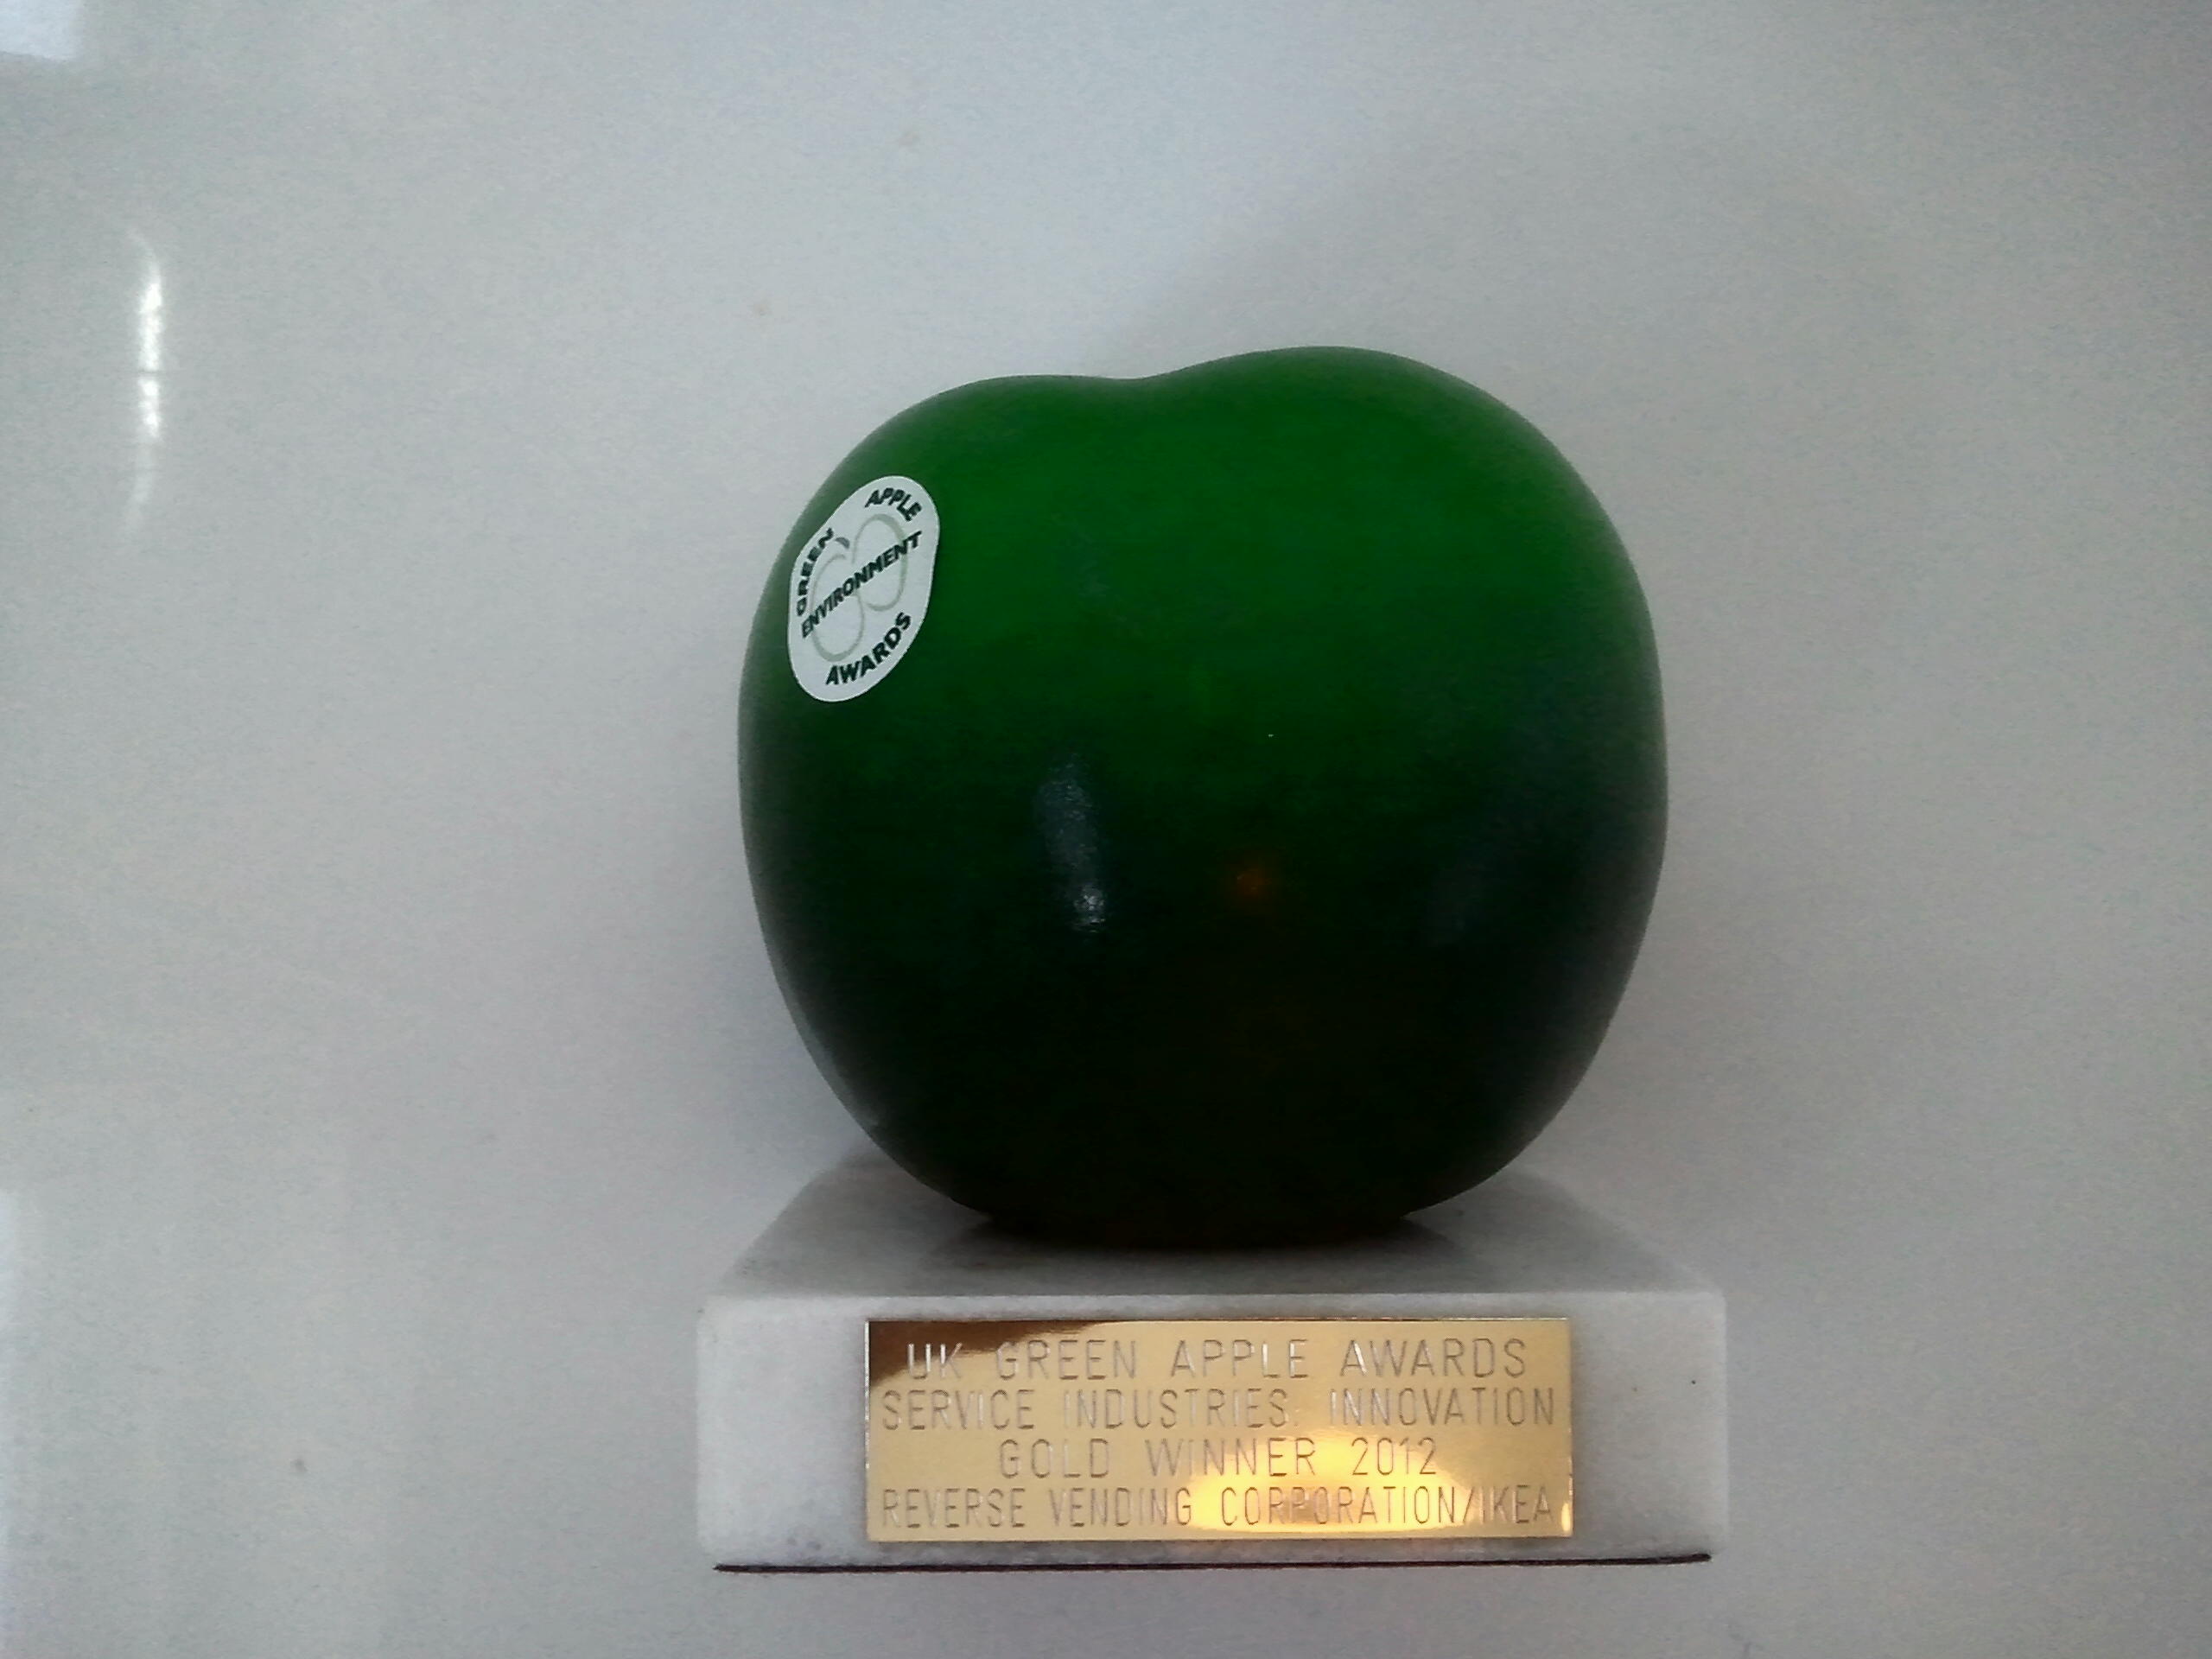 Green Apple Award 2012 